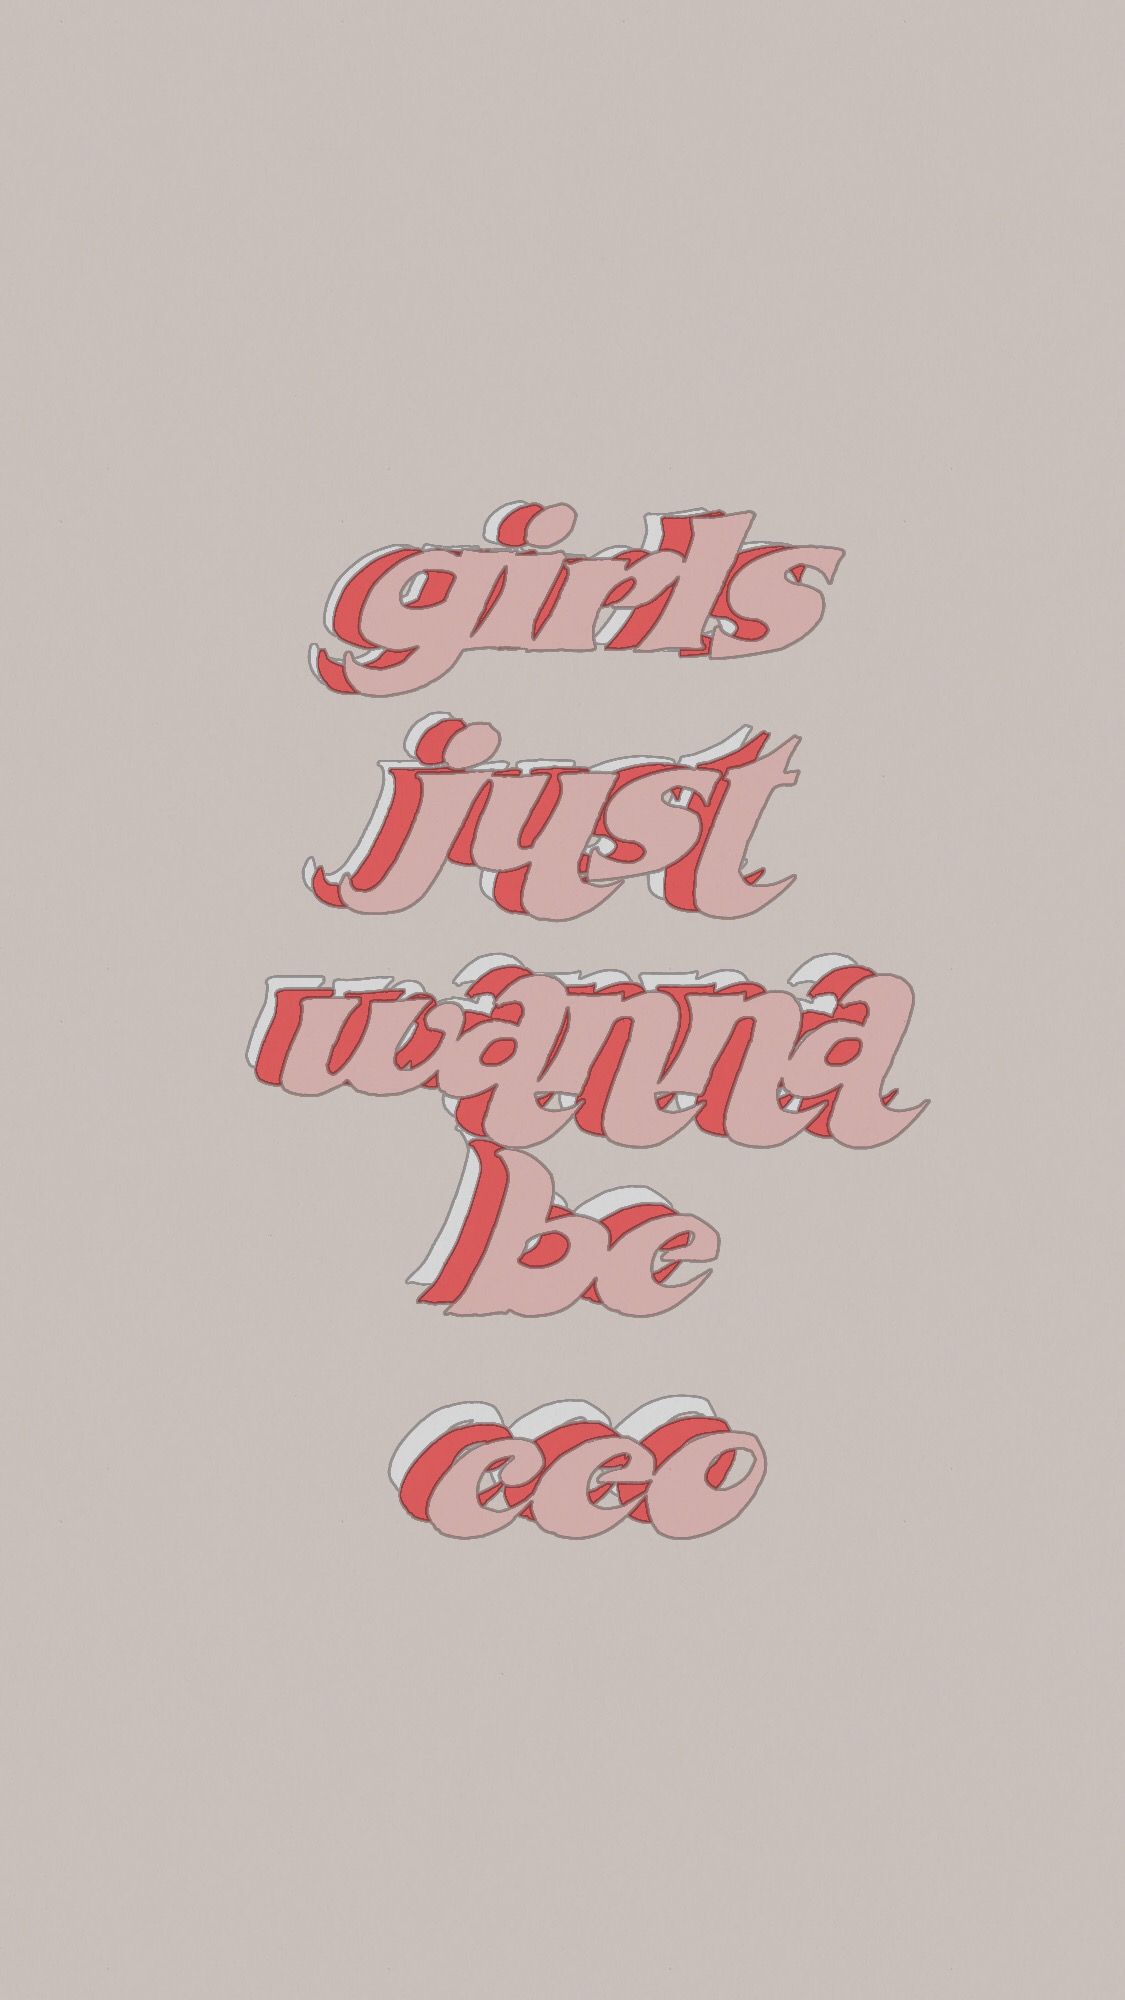 girls just wanna be ceo iphone wallpaper. iPhone wallpaper, Quotes, Wallpaper